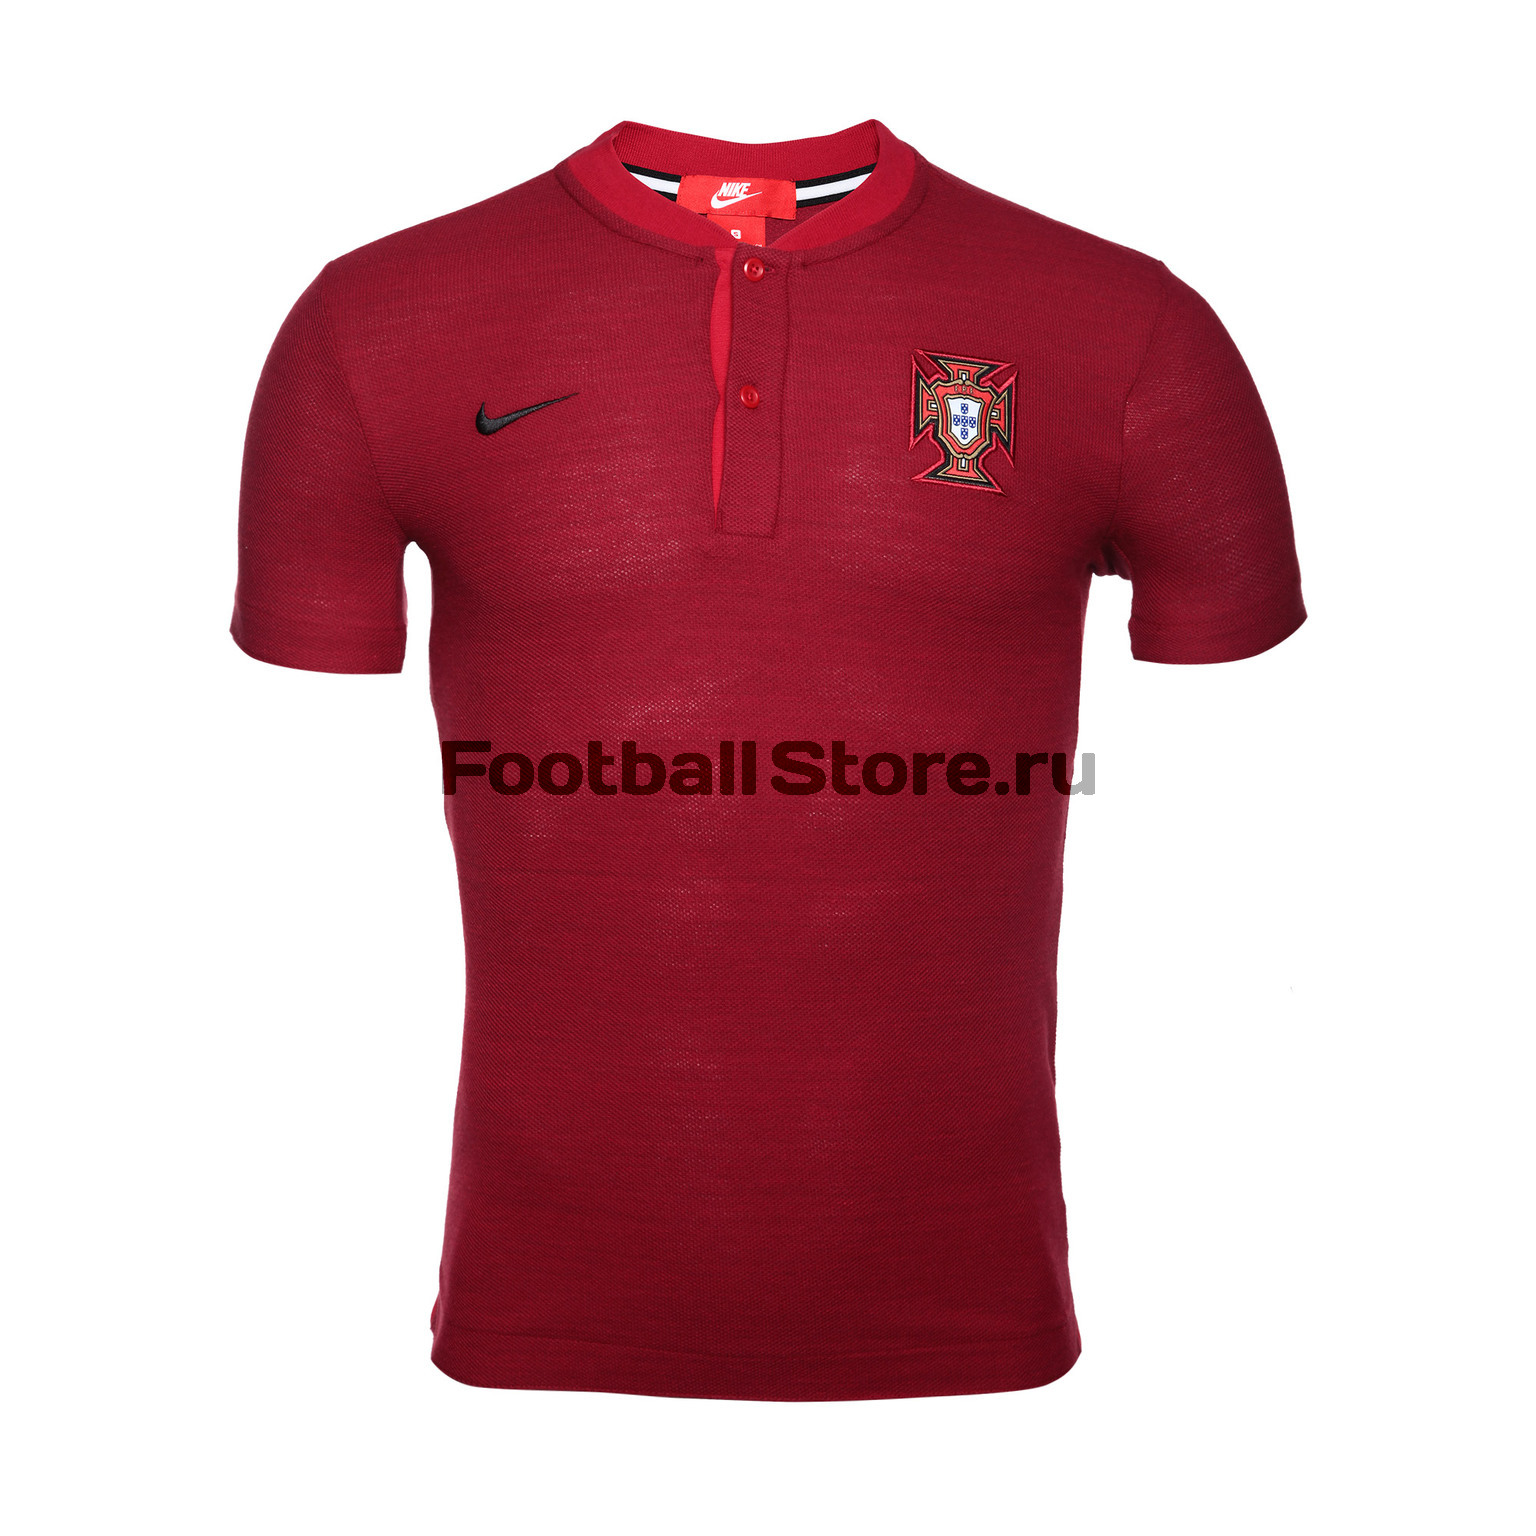 Поло Nike сборной Португалии 891774-677